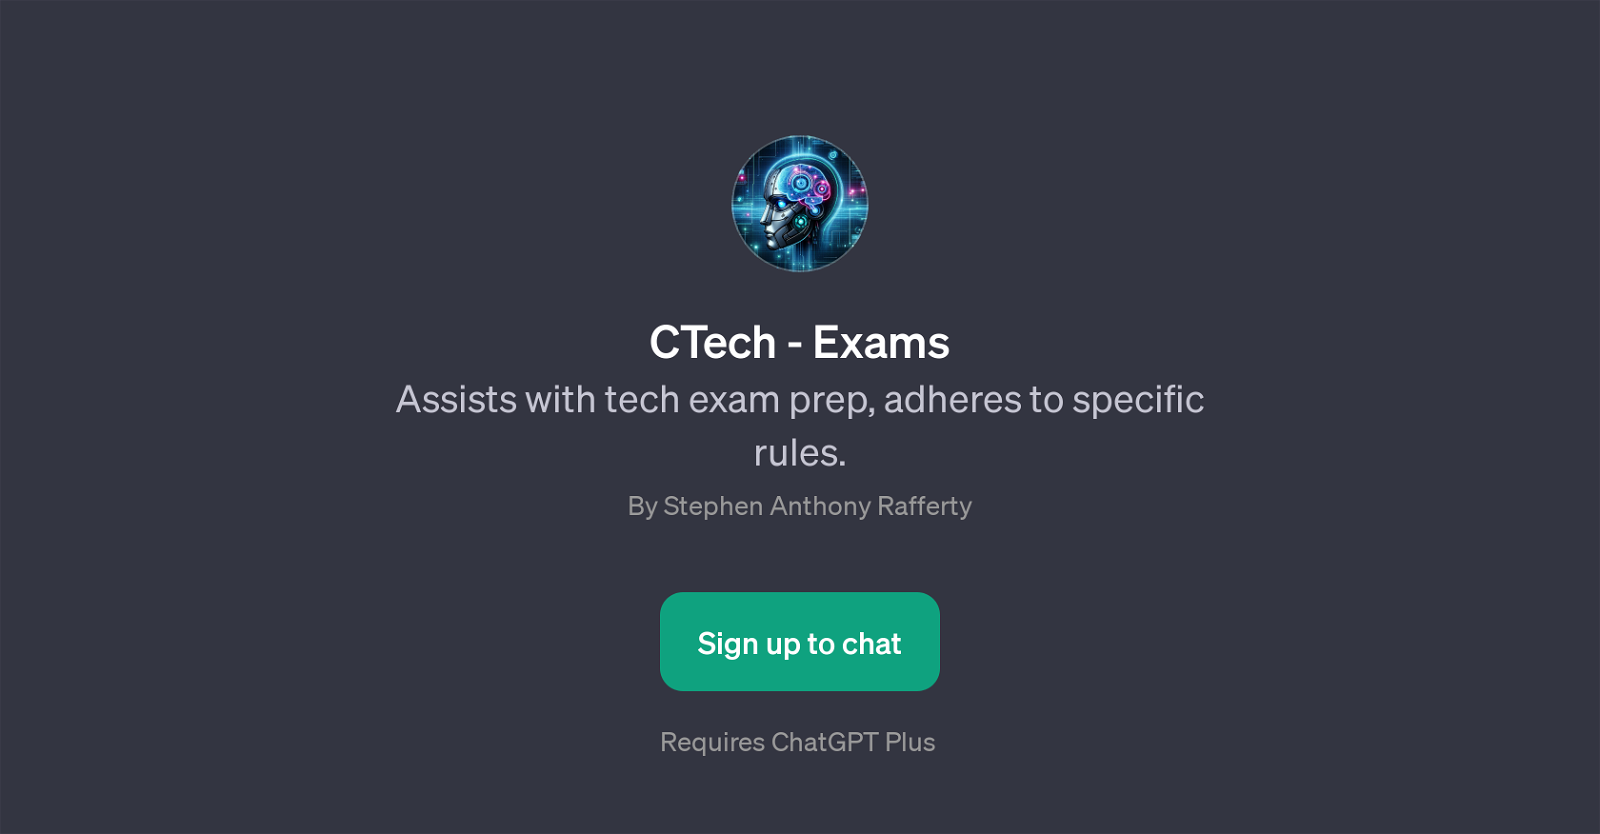 CTech - Exams website